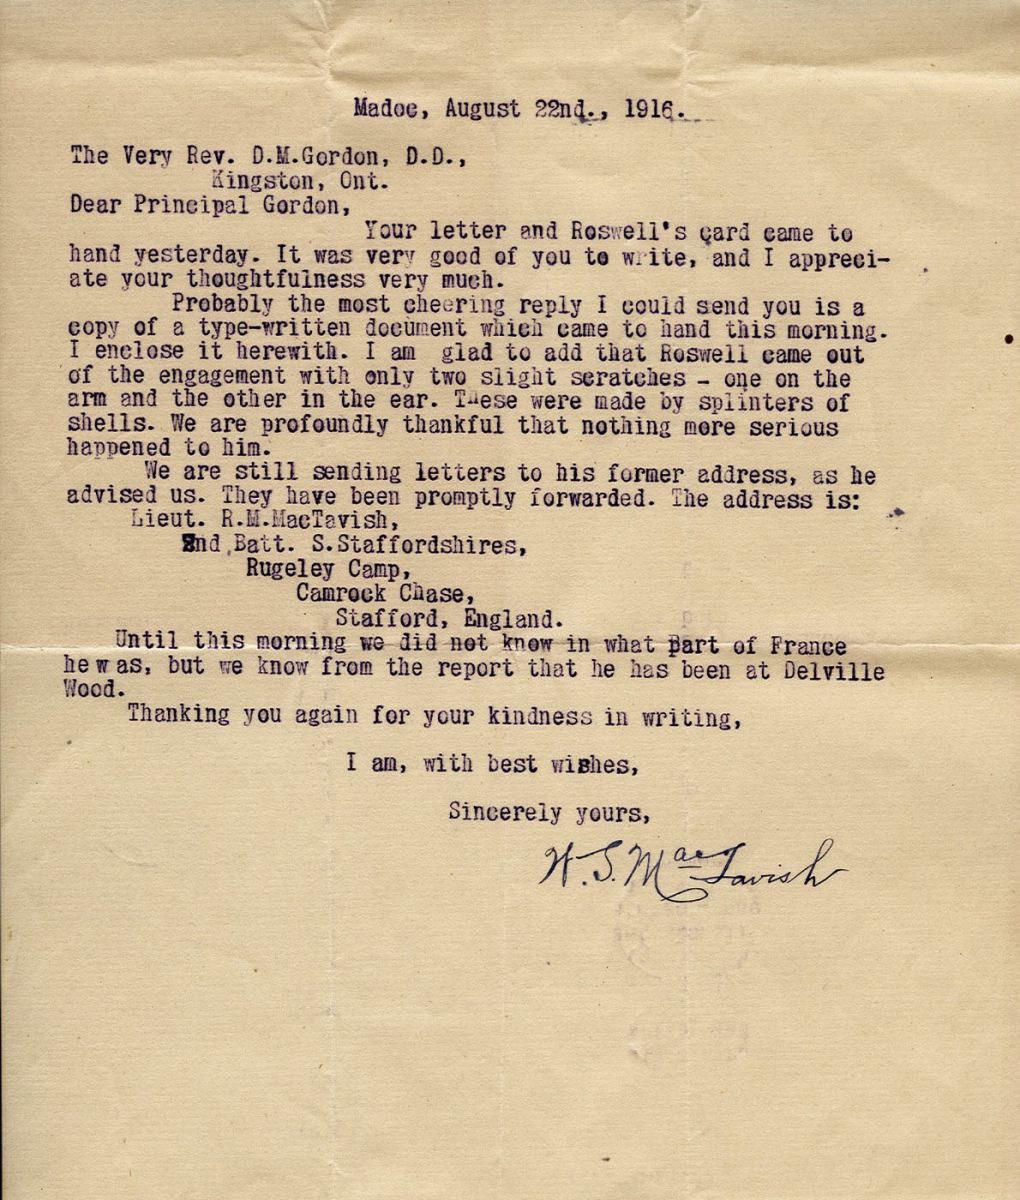 Letter from W.S. MacTavish to Rev. D.M. Gordon, 22nd August 1916